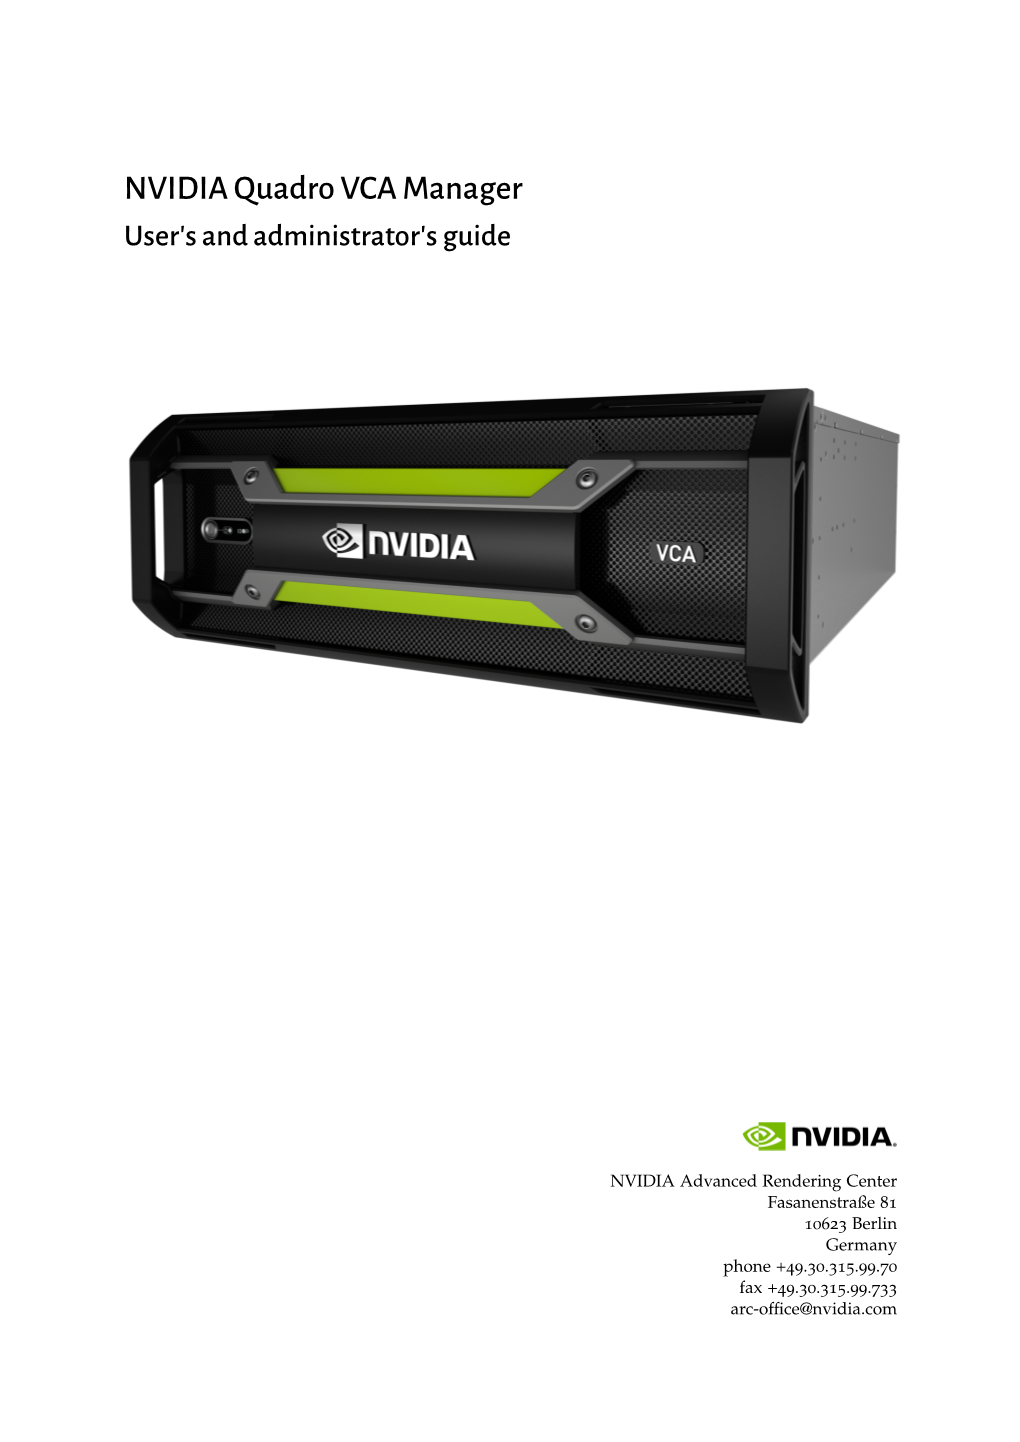 NVIDIA Quadro VCA Manager User's and Administrator's Guide